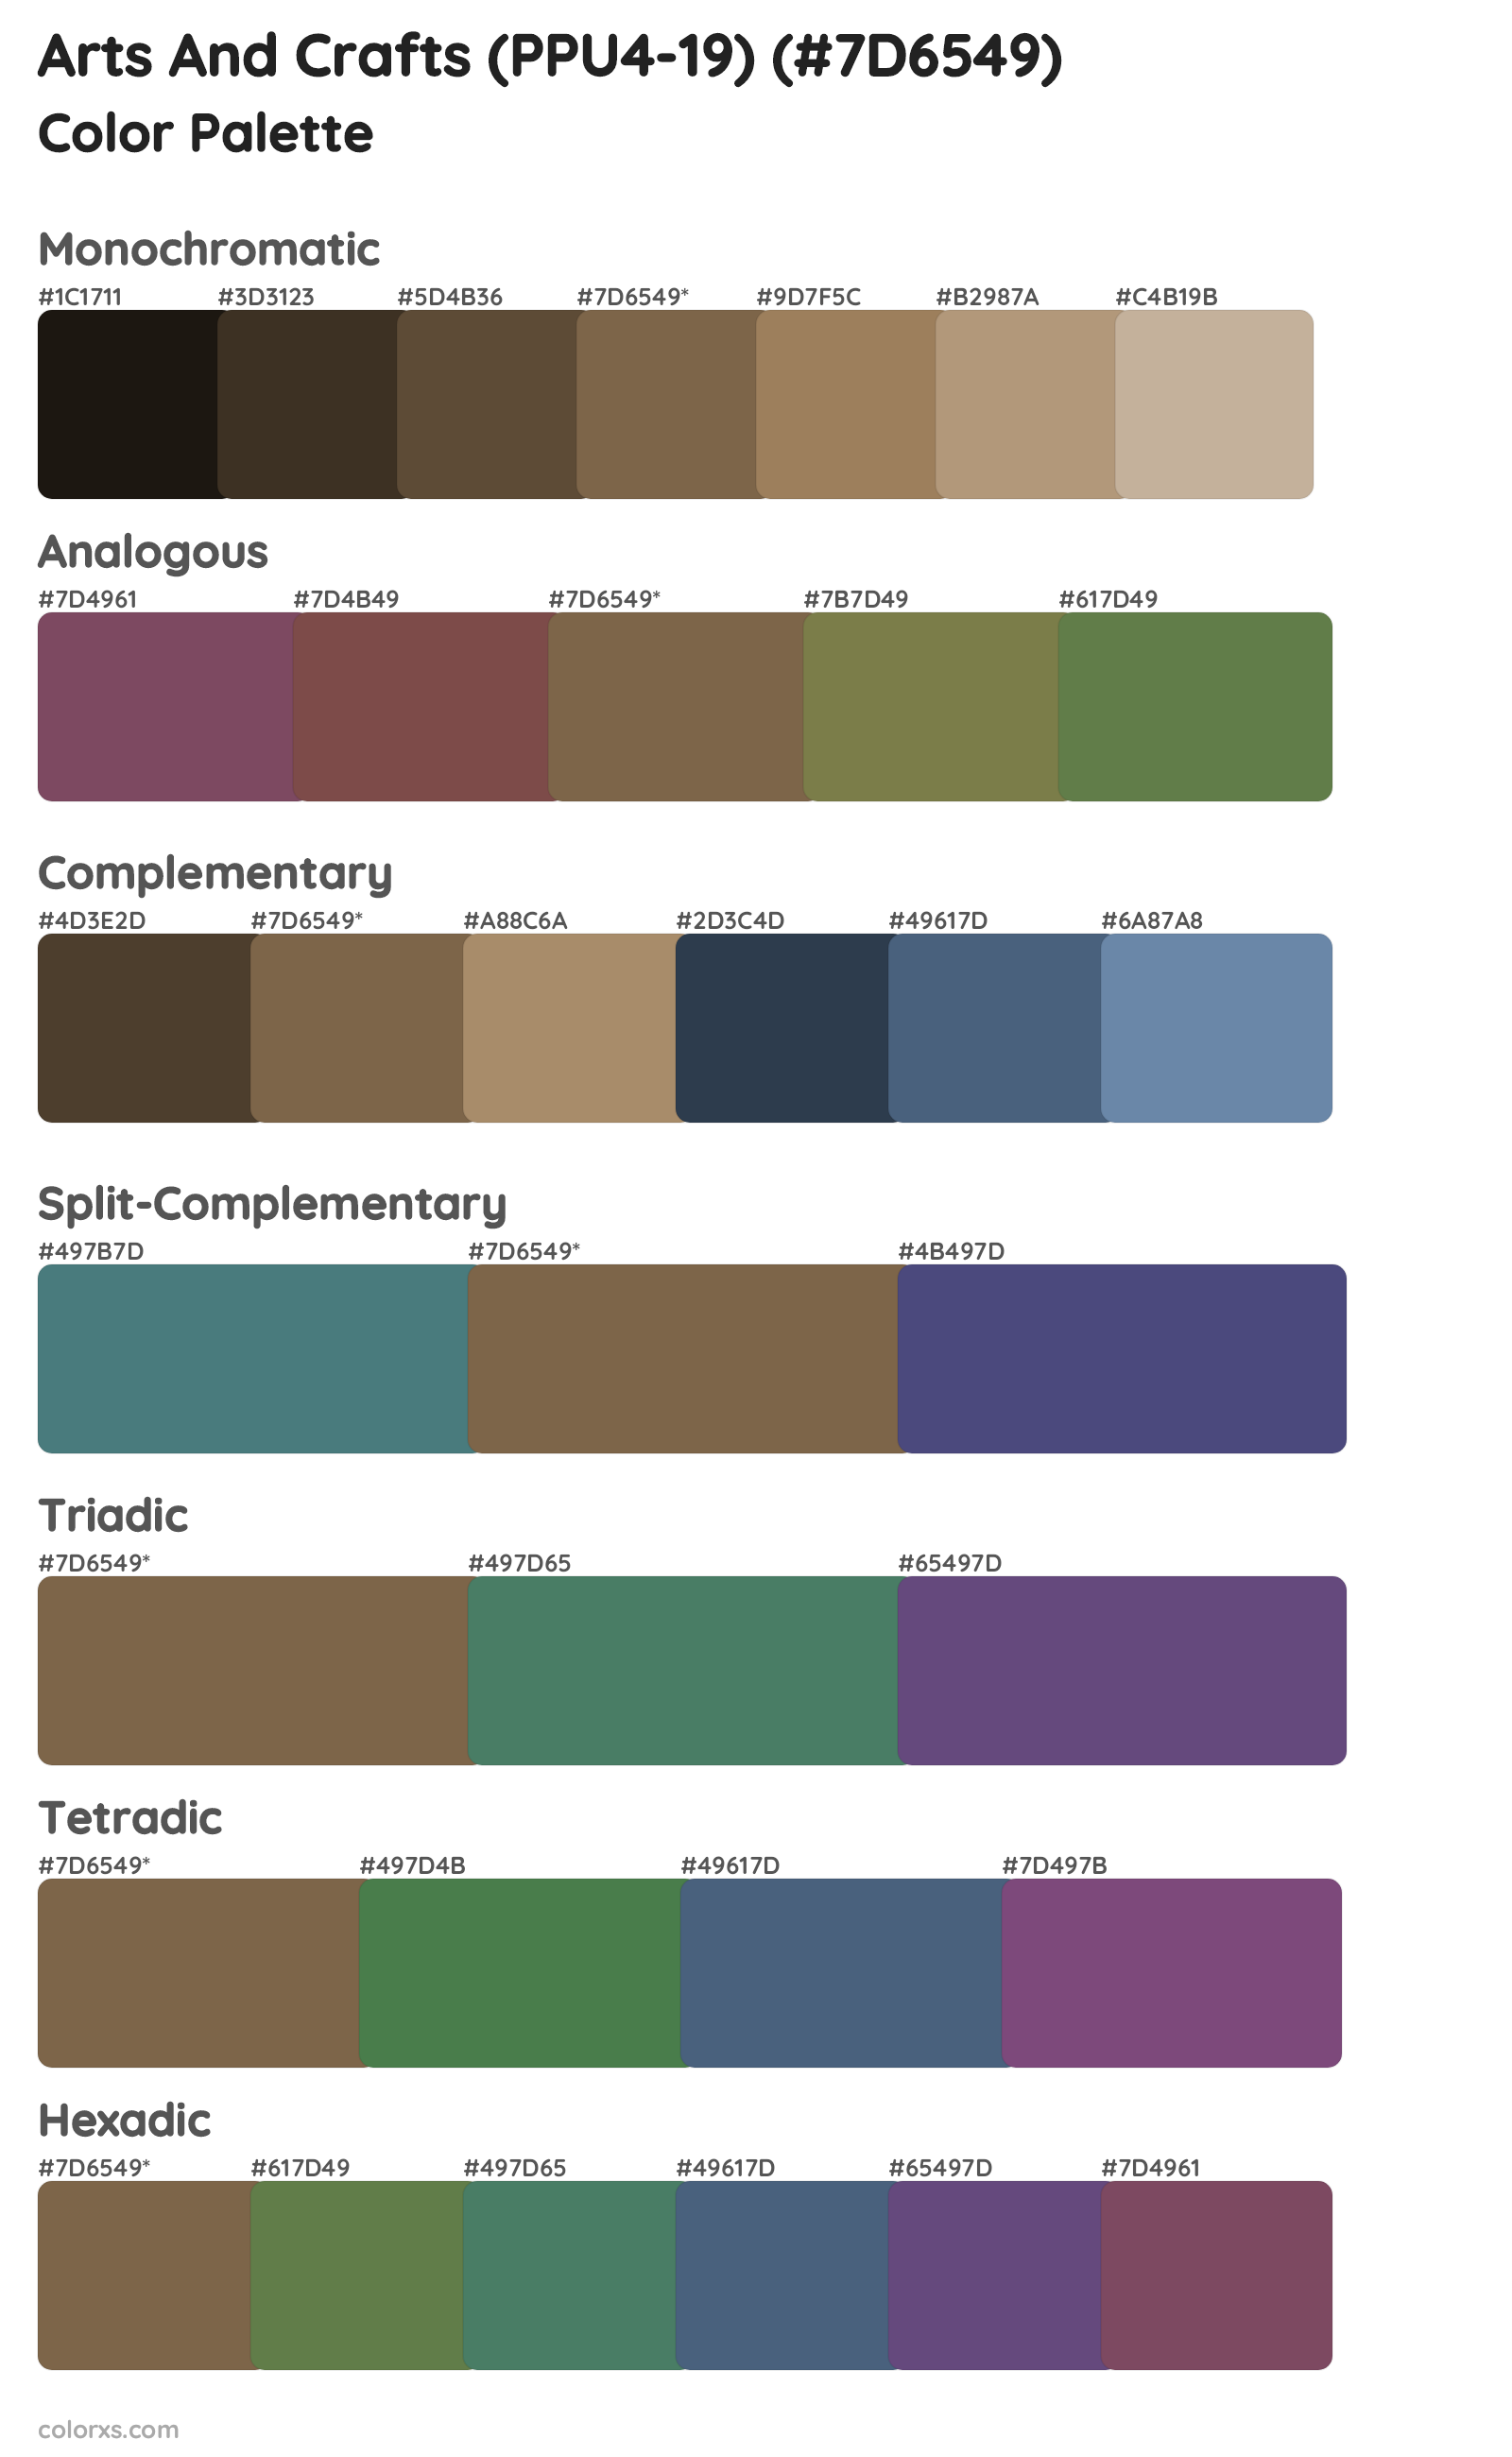 Arts And Crafts (PPU4-19) Color Scheme Palettes